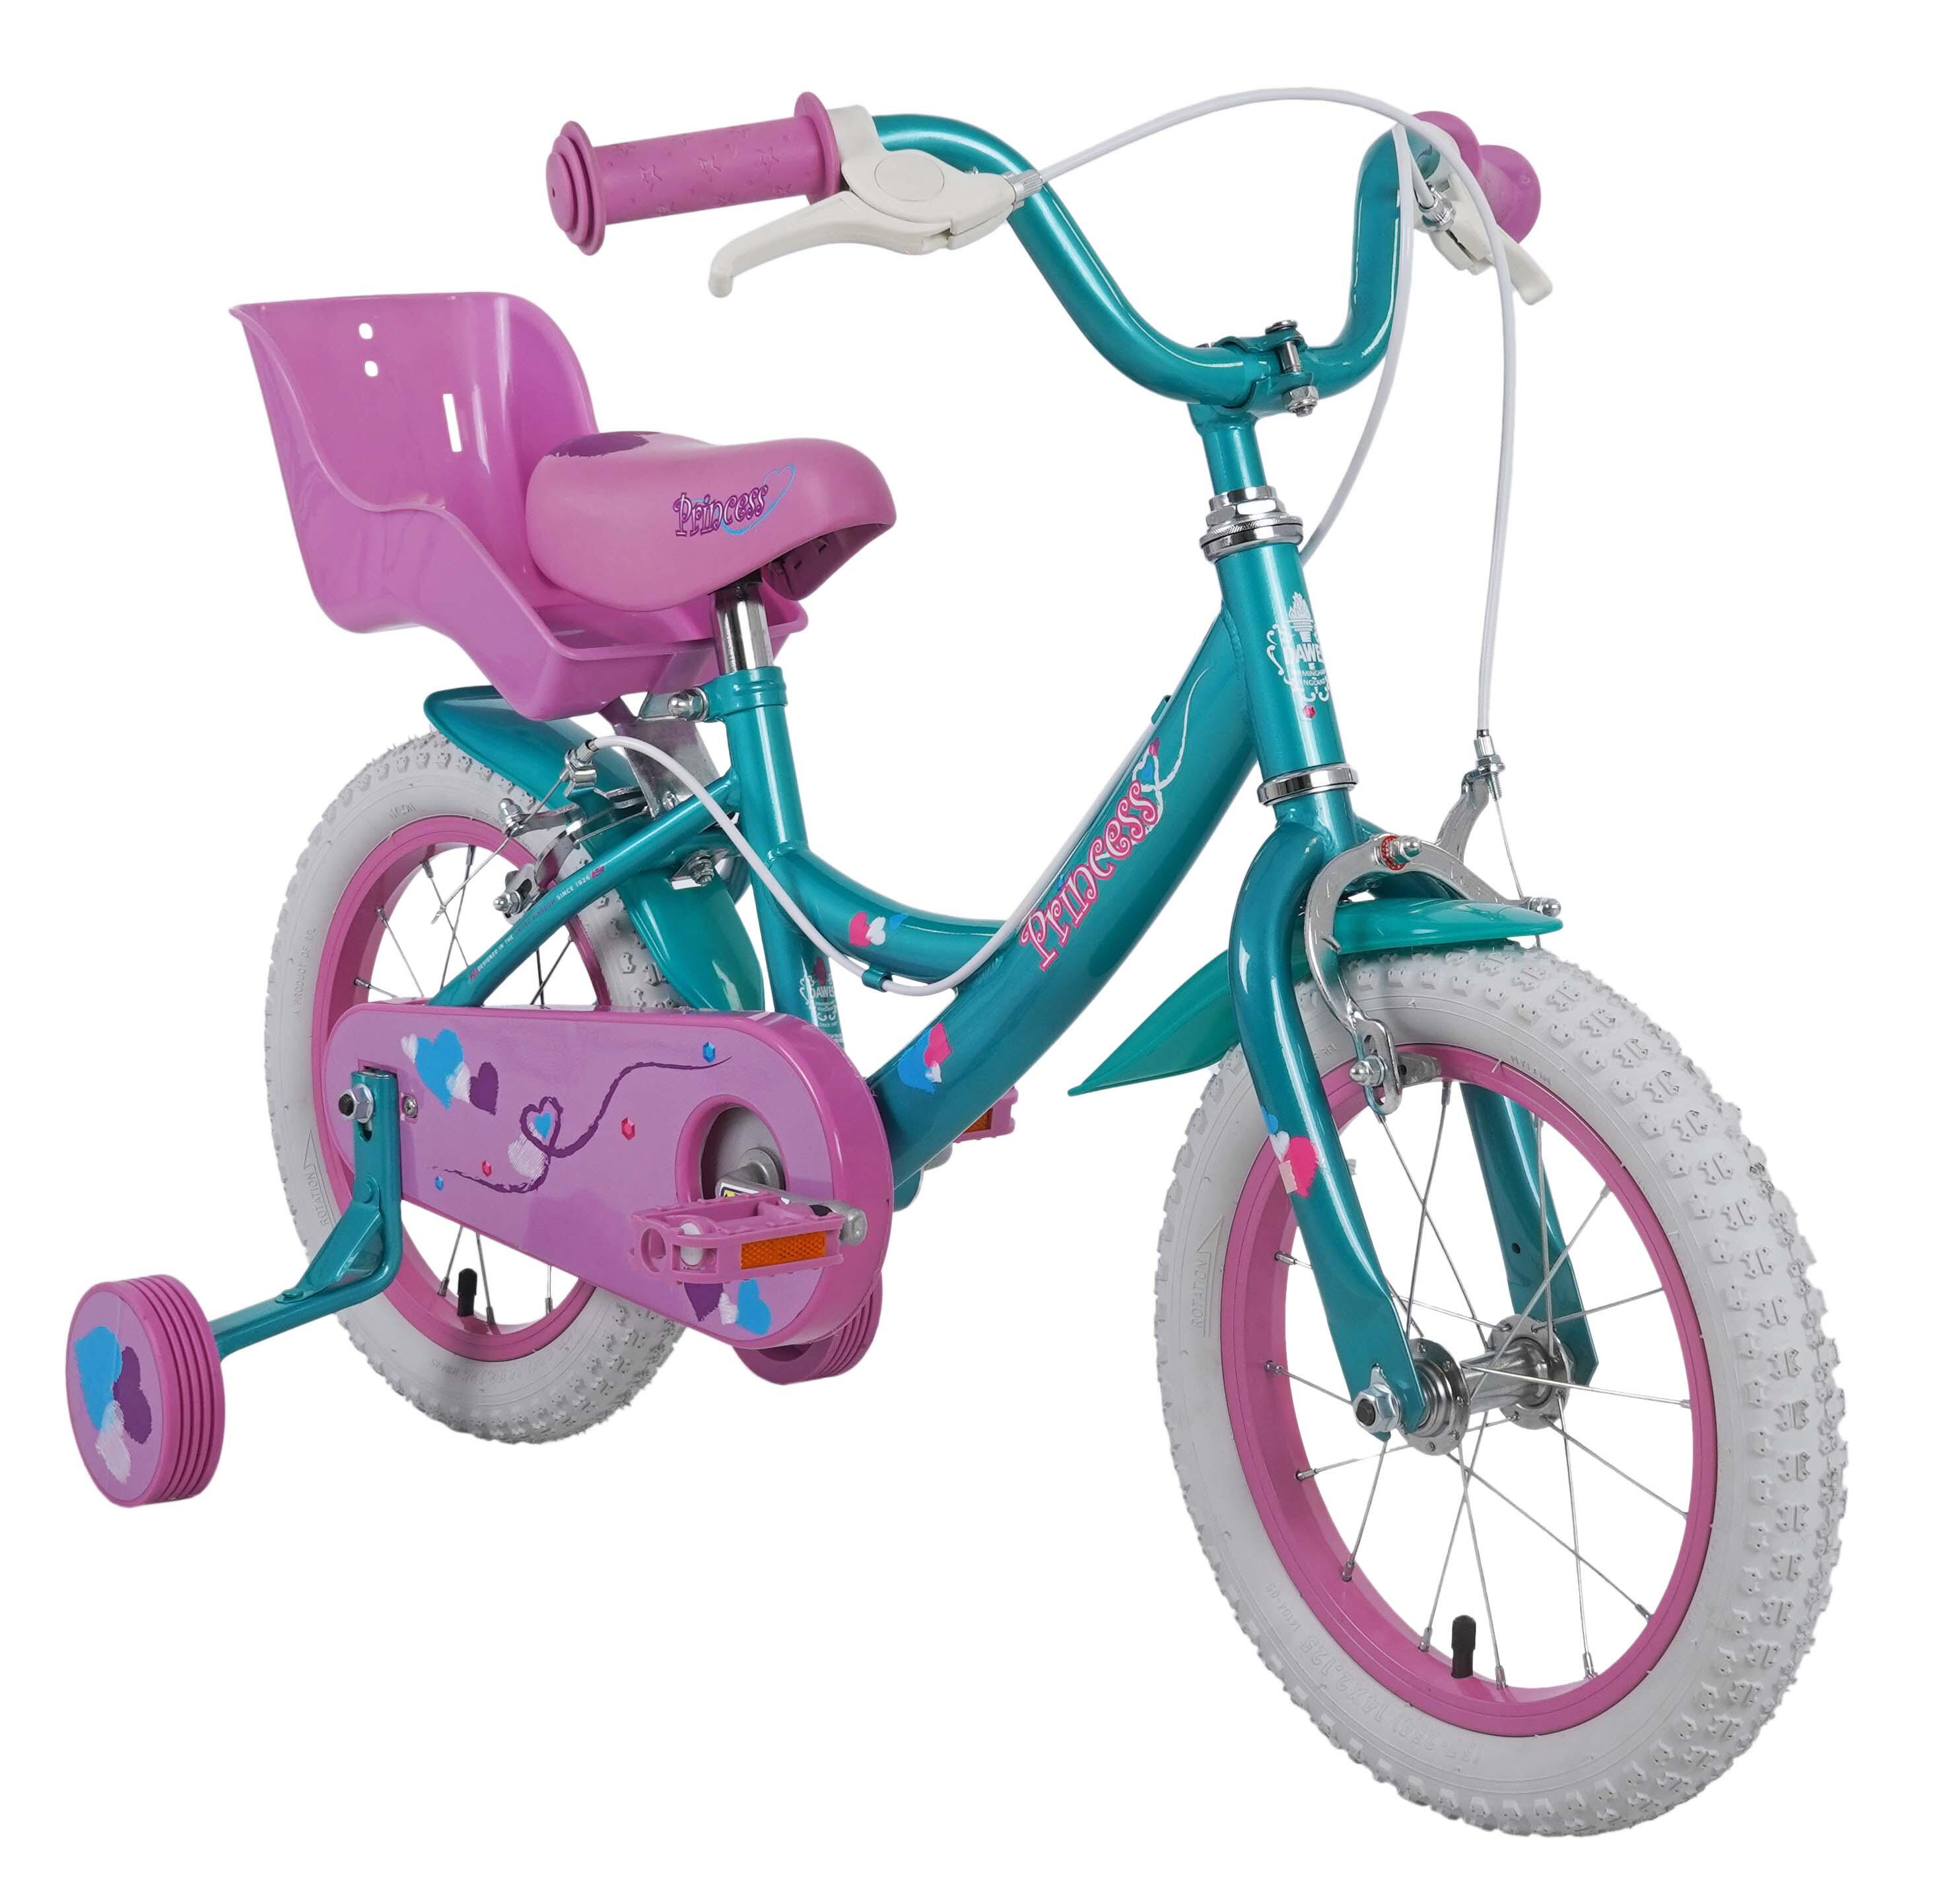 Dawes 14" Junior Bike Princess Mint 2/7